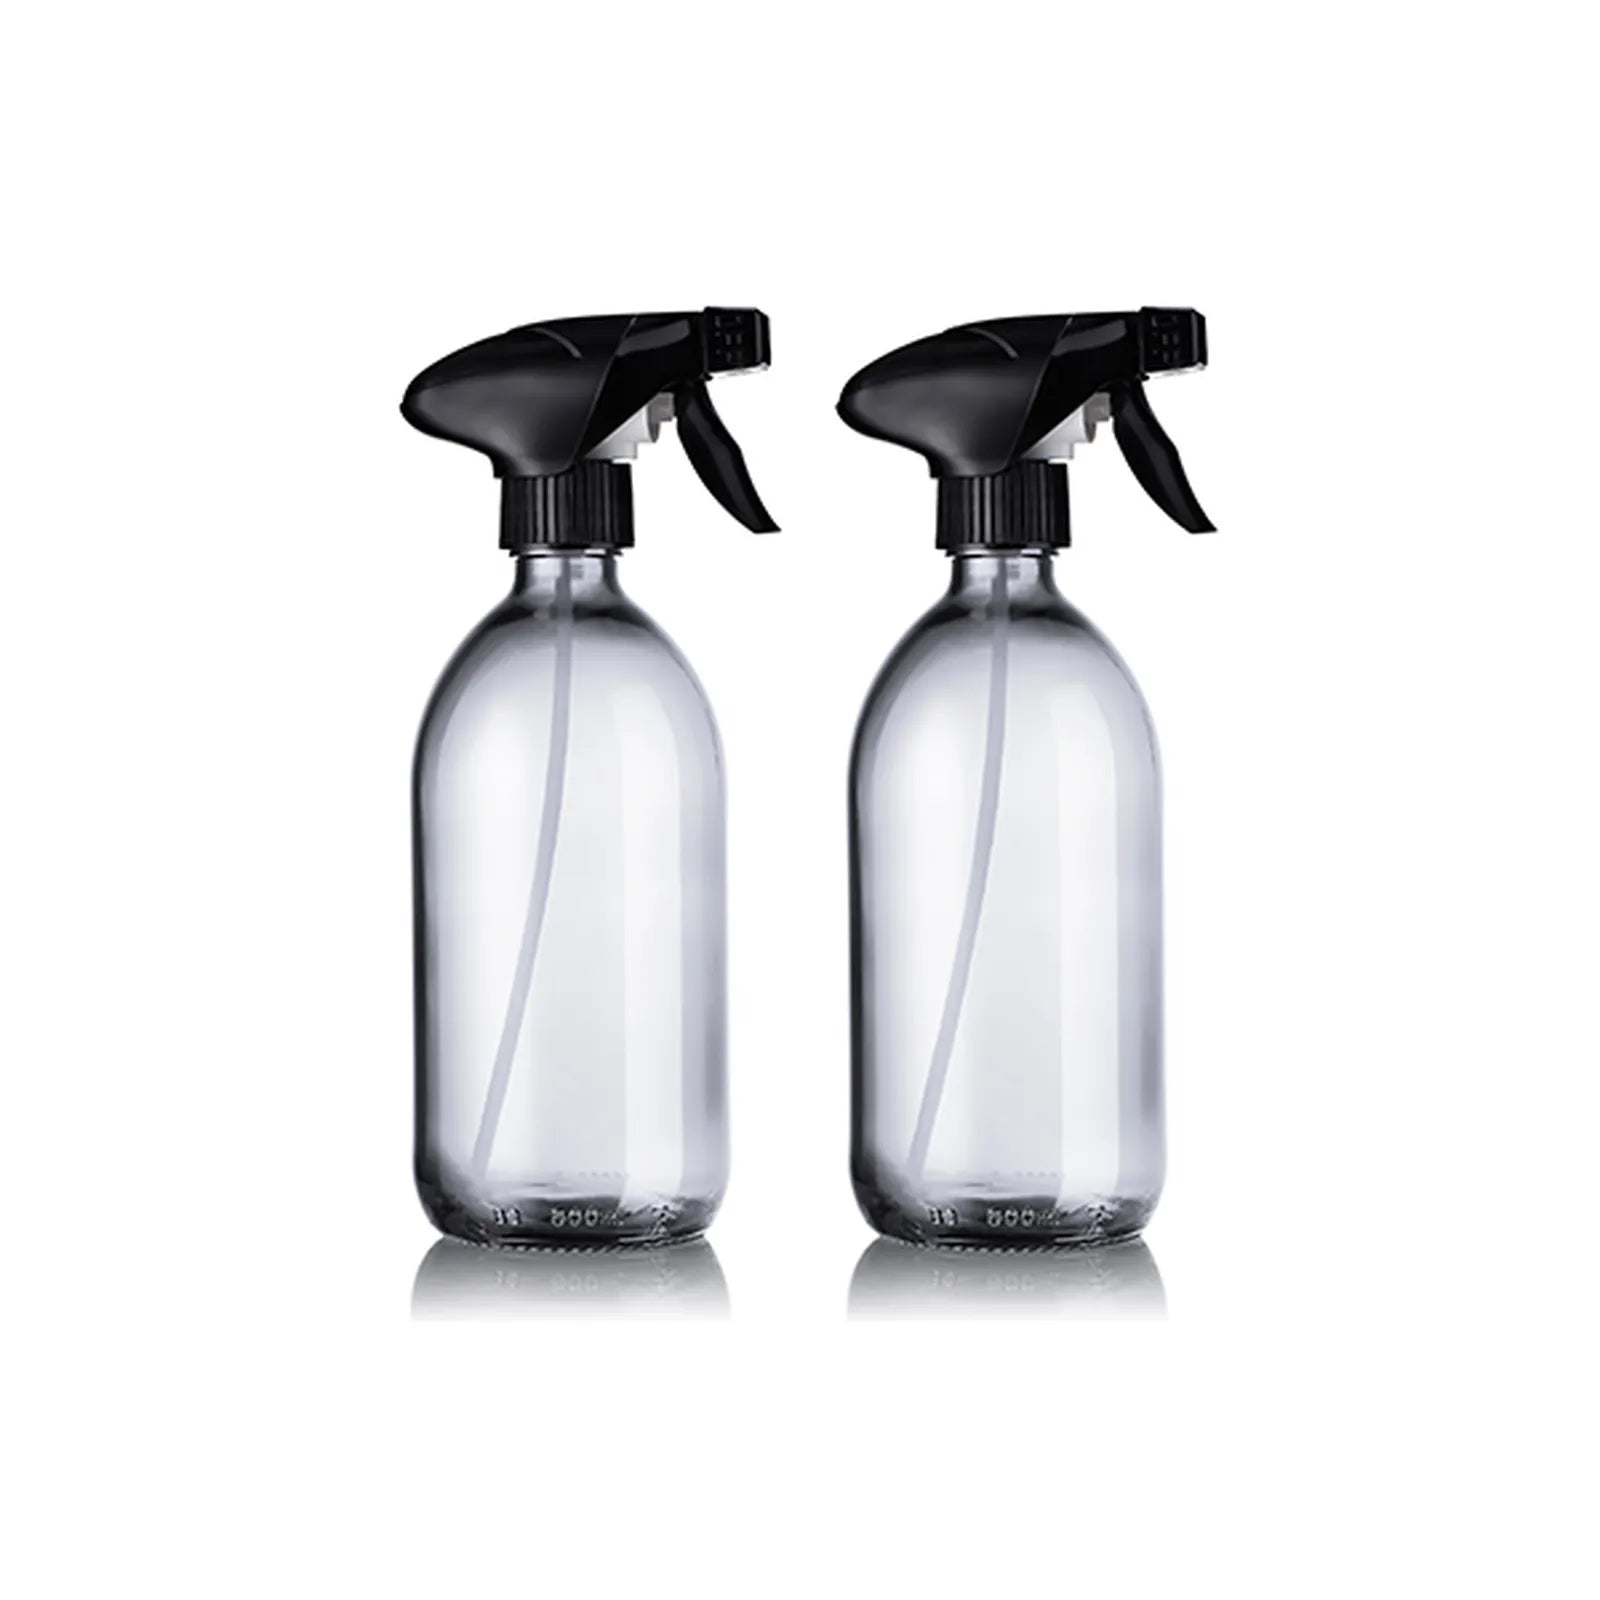 Achat Flacon spray vaporisateur verre blanc rechargeable - 300ml / 500ml -  Burette en gros